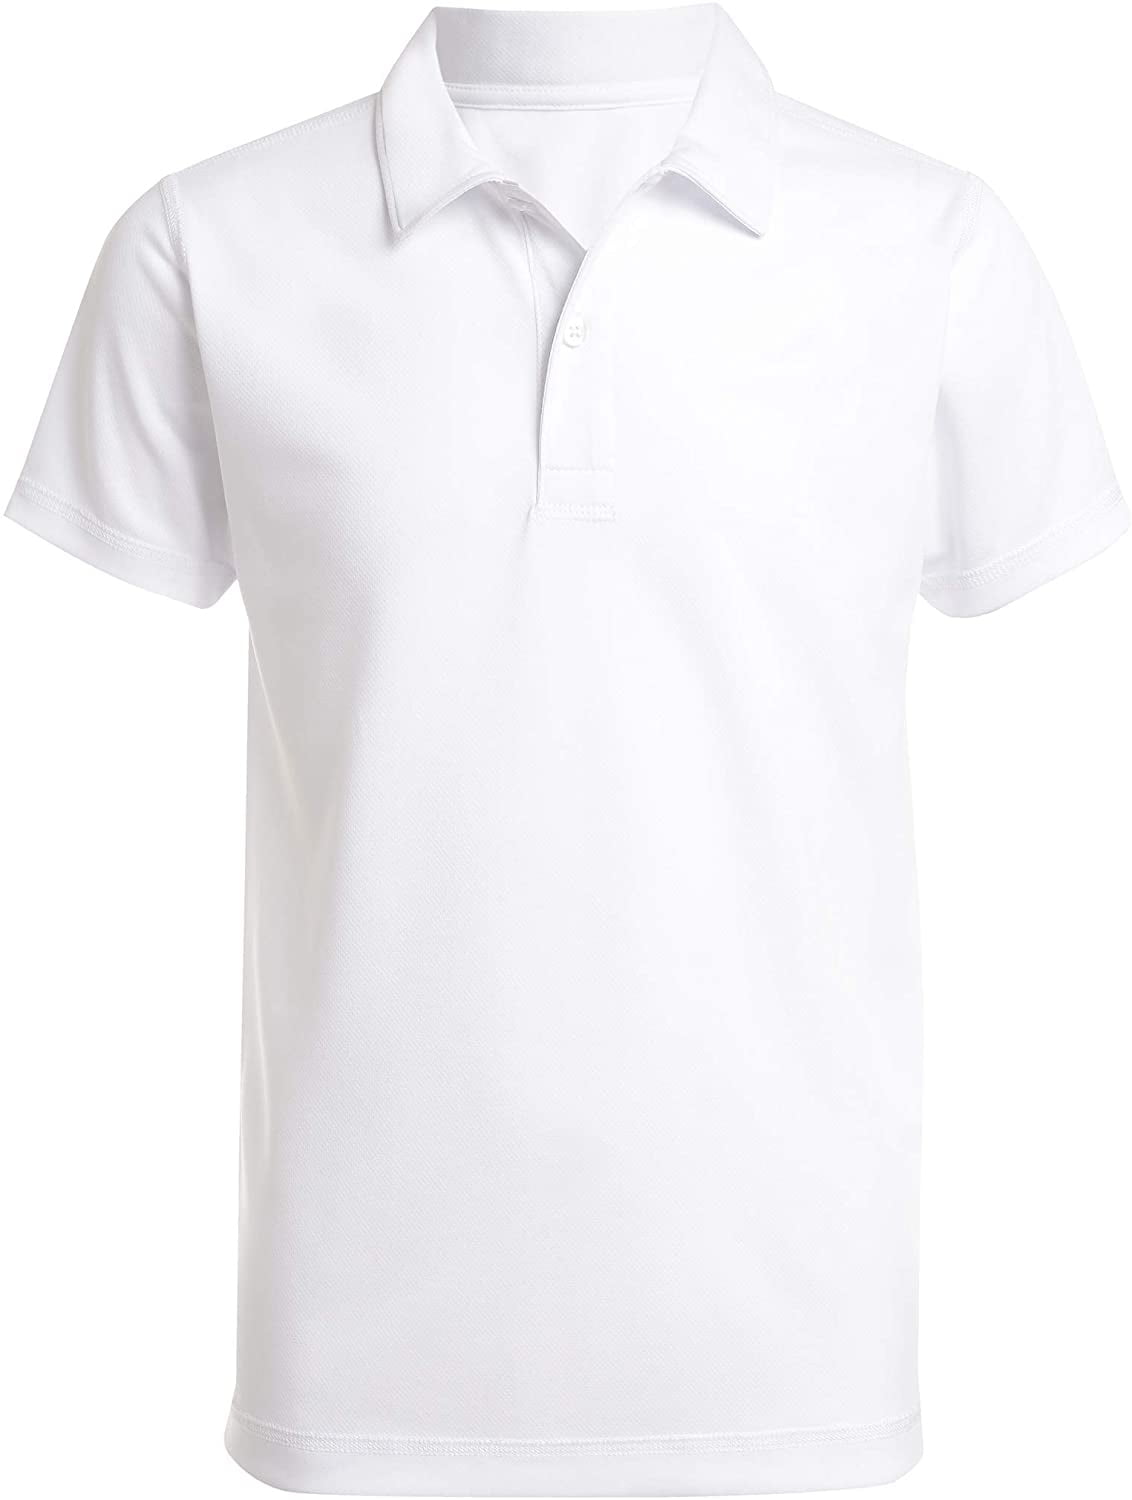 Chaps Boys Super Soft Sensory-Friendly Short Sleeve Performance Polo Shirt